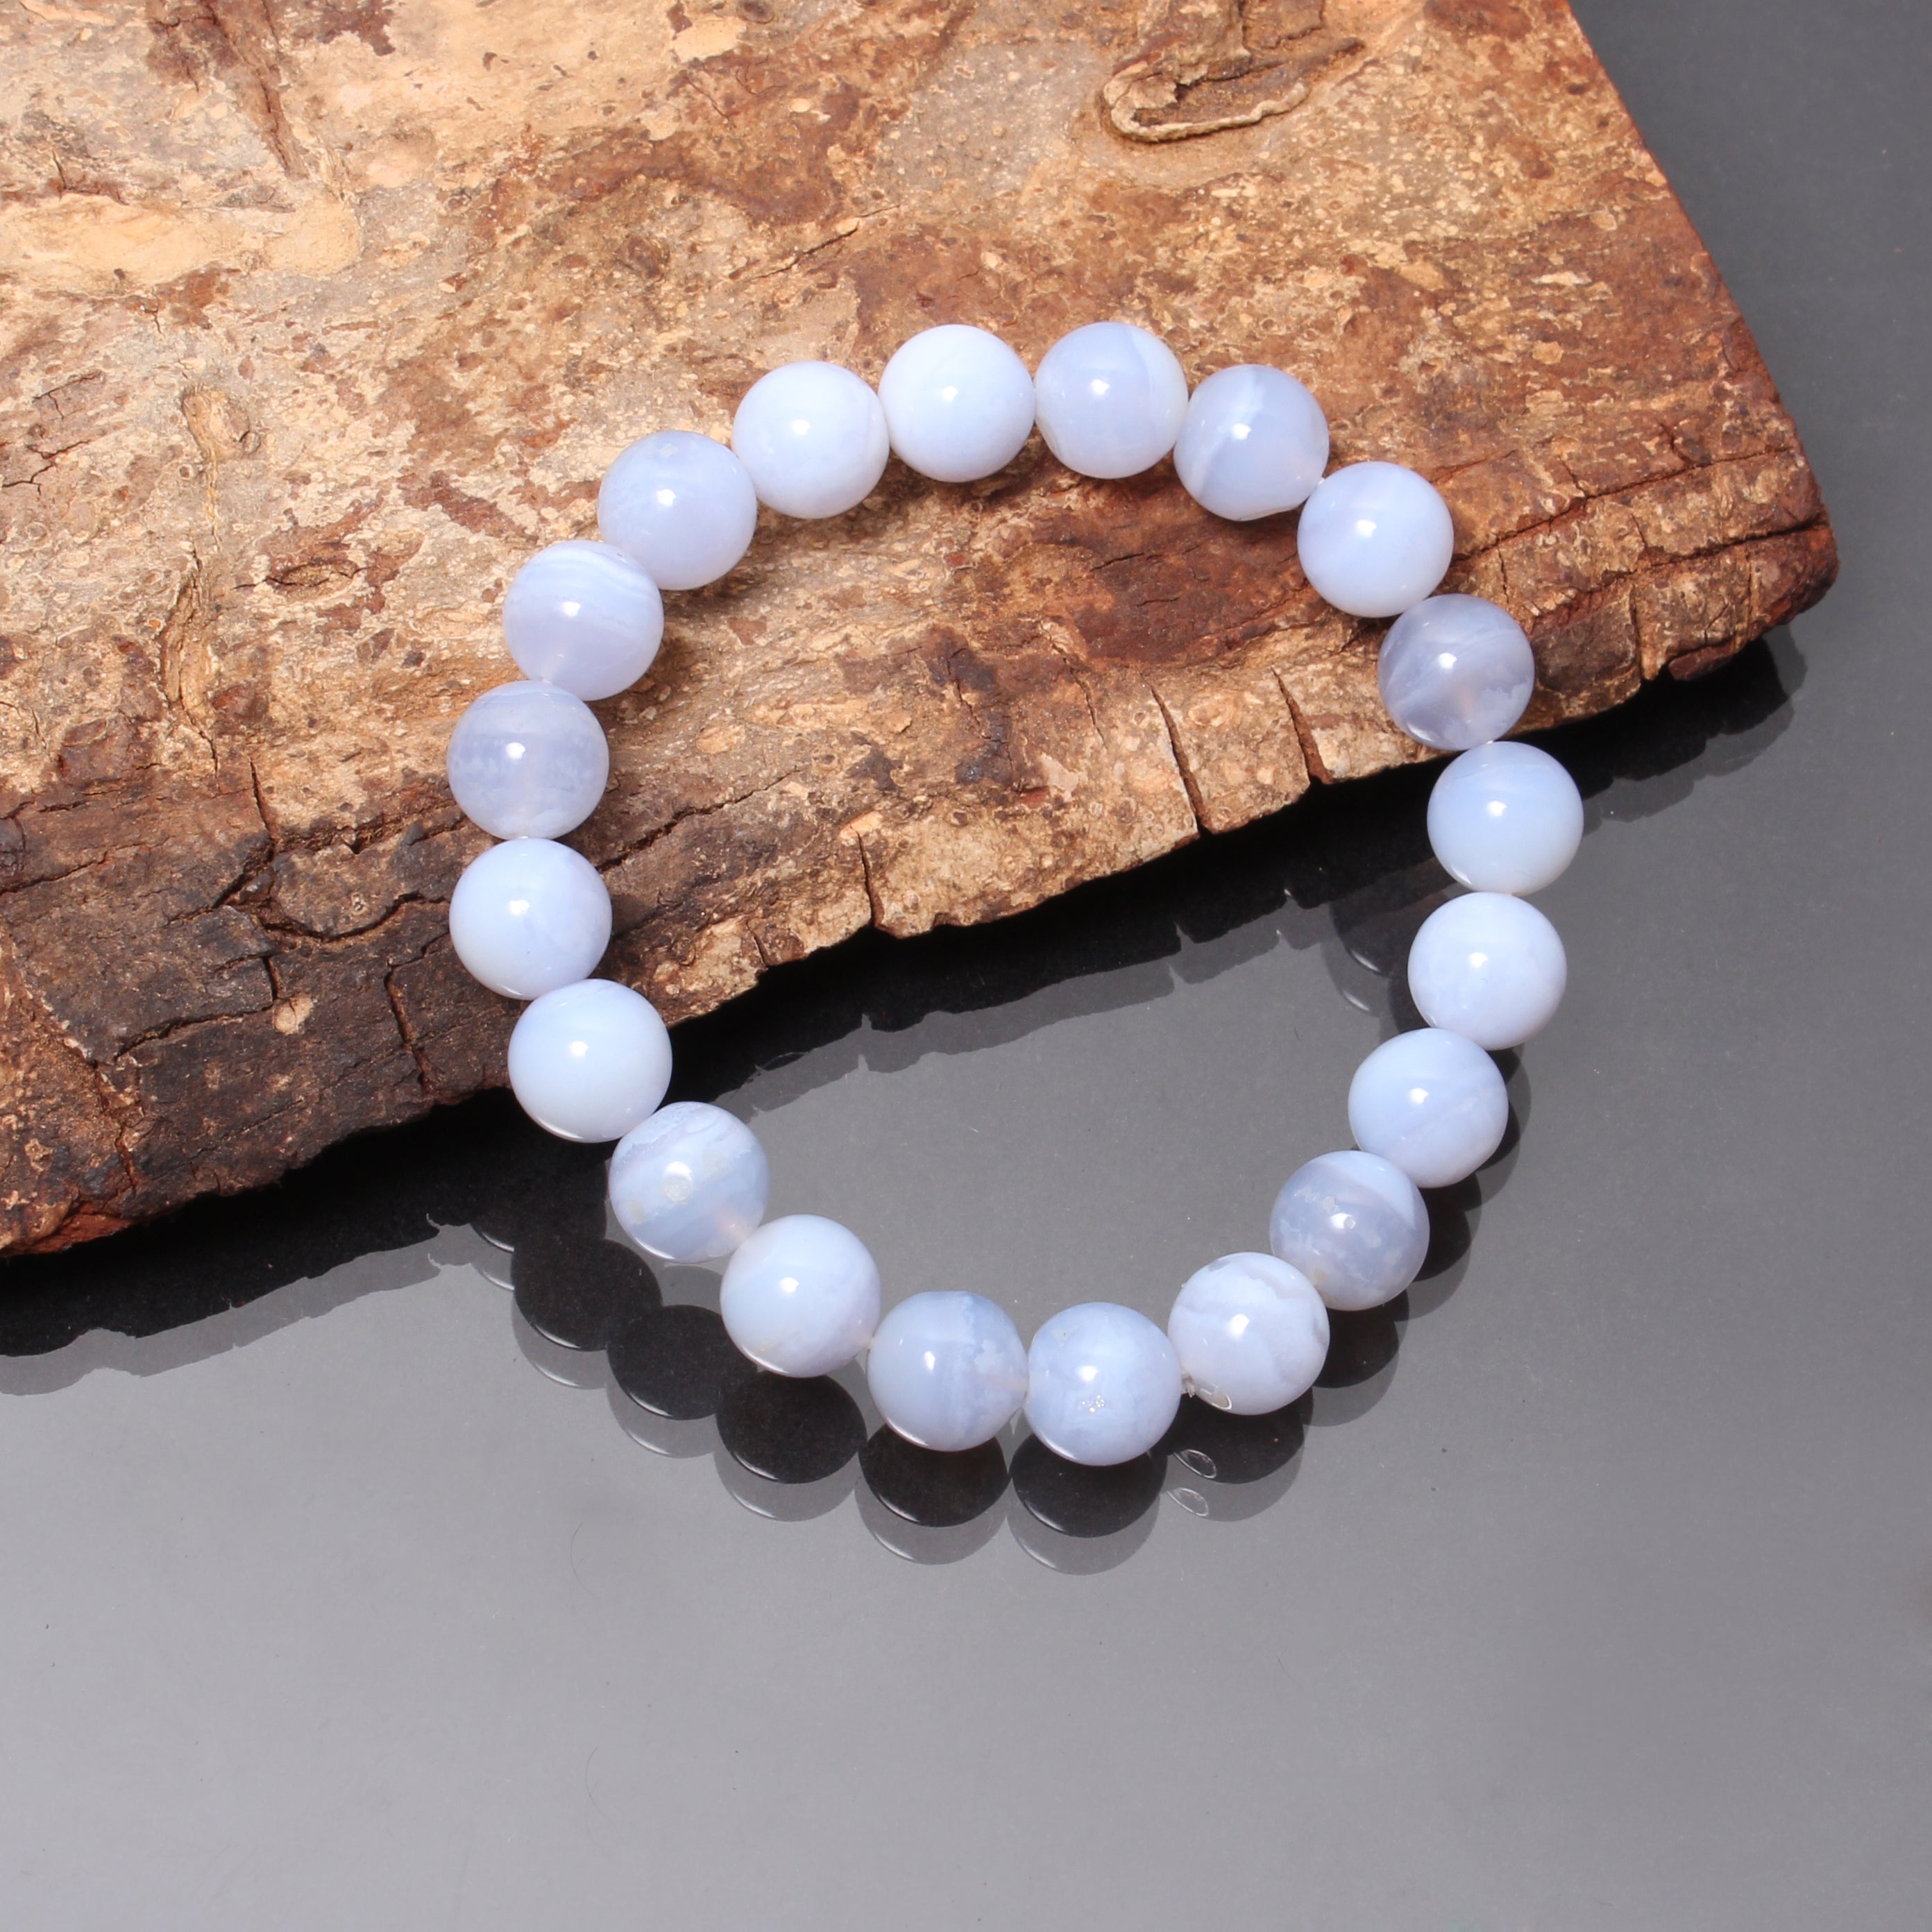 Blue Lace Agate Tumbled Gemstone Bracelet: 6-8 mm Stones (Agate Nugget  Bracelet) | eBay